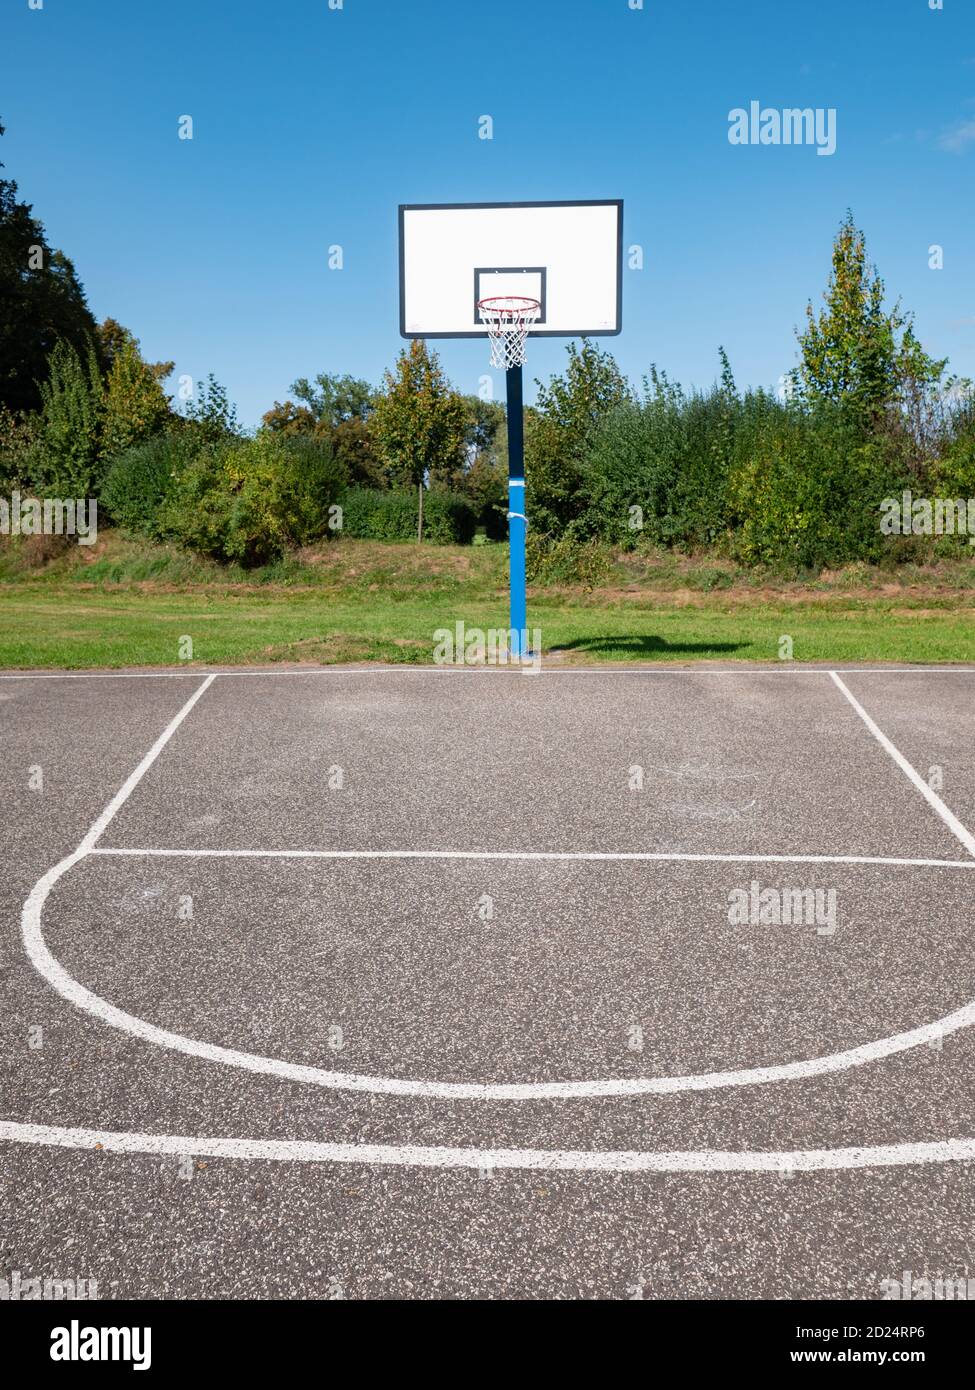 Outdoor basketball court at city park,urban street basket Stock Photo -  Alamy